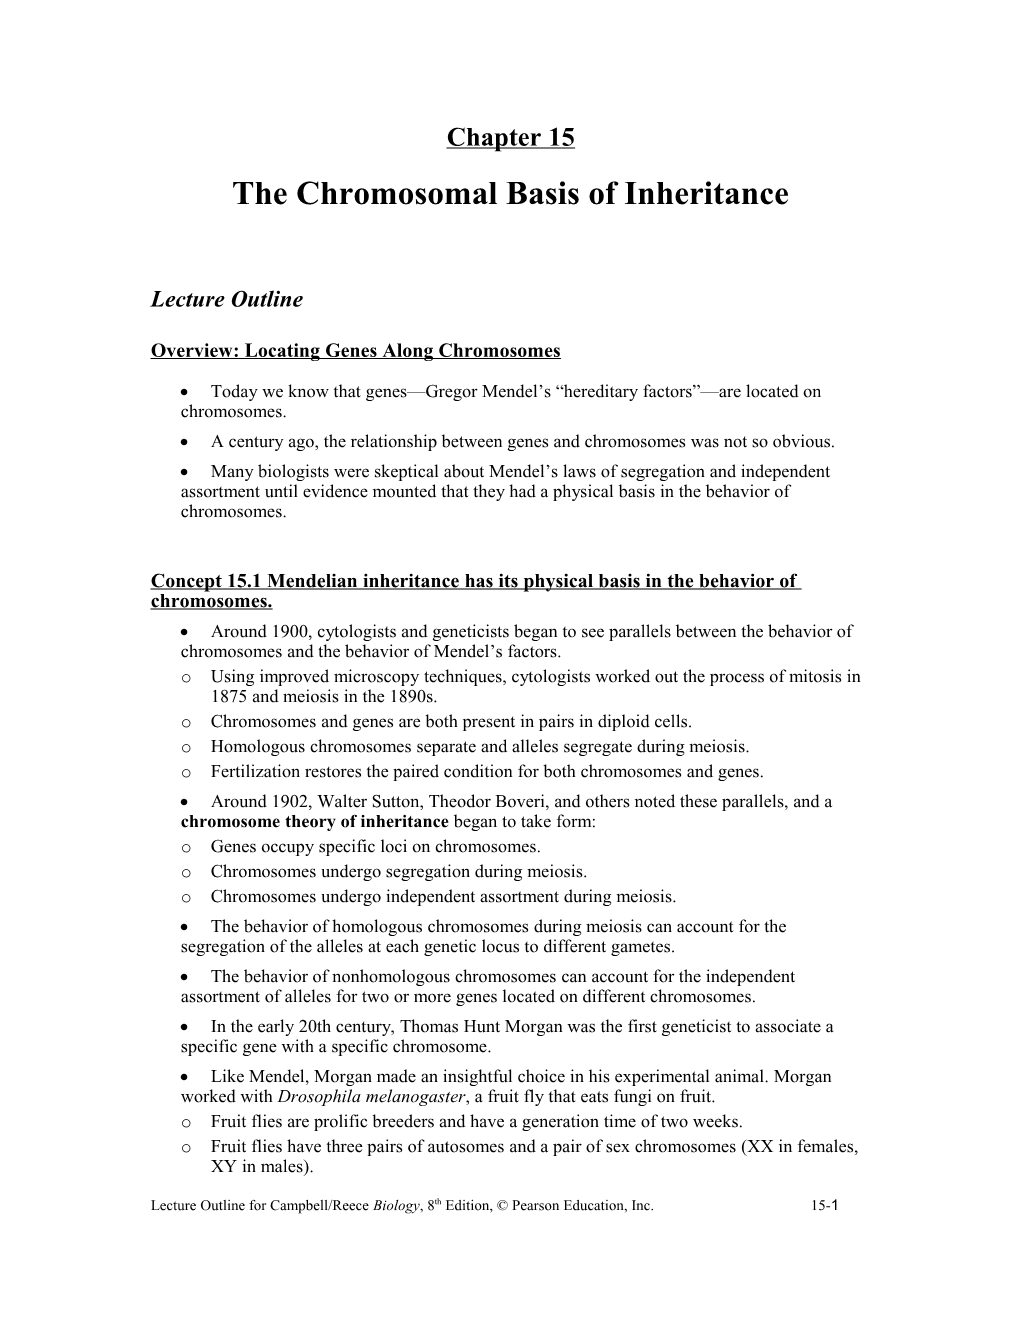 The Chromosomal Basis of Inheritance s1